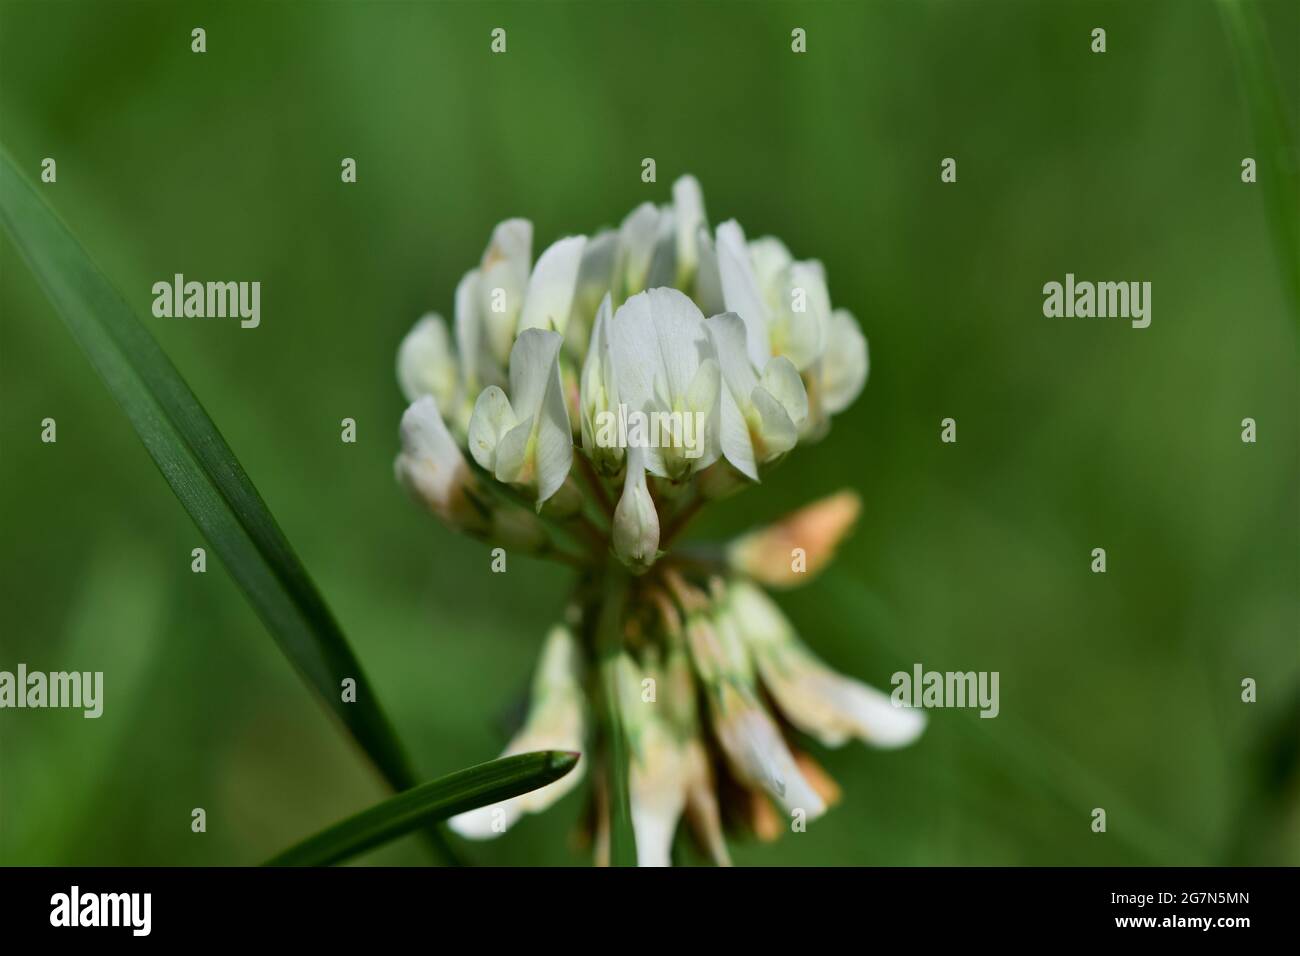 White clover blossom against green blurred grasses as background Stock Photo